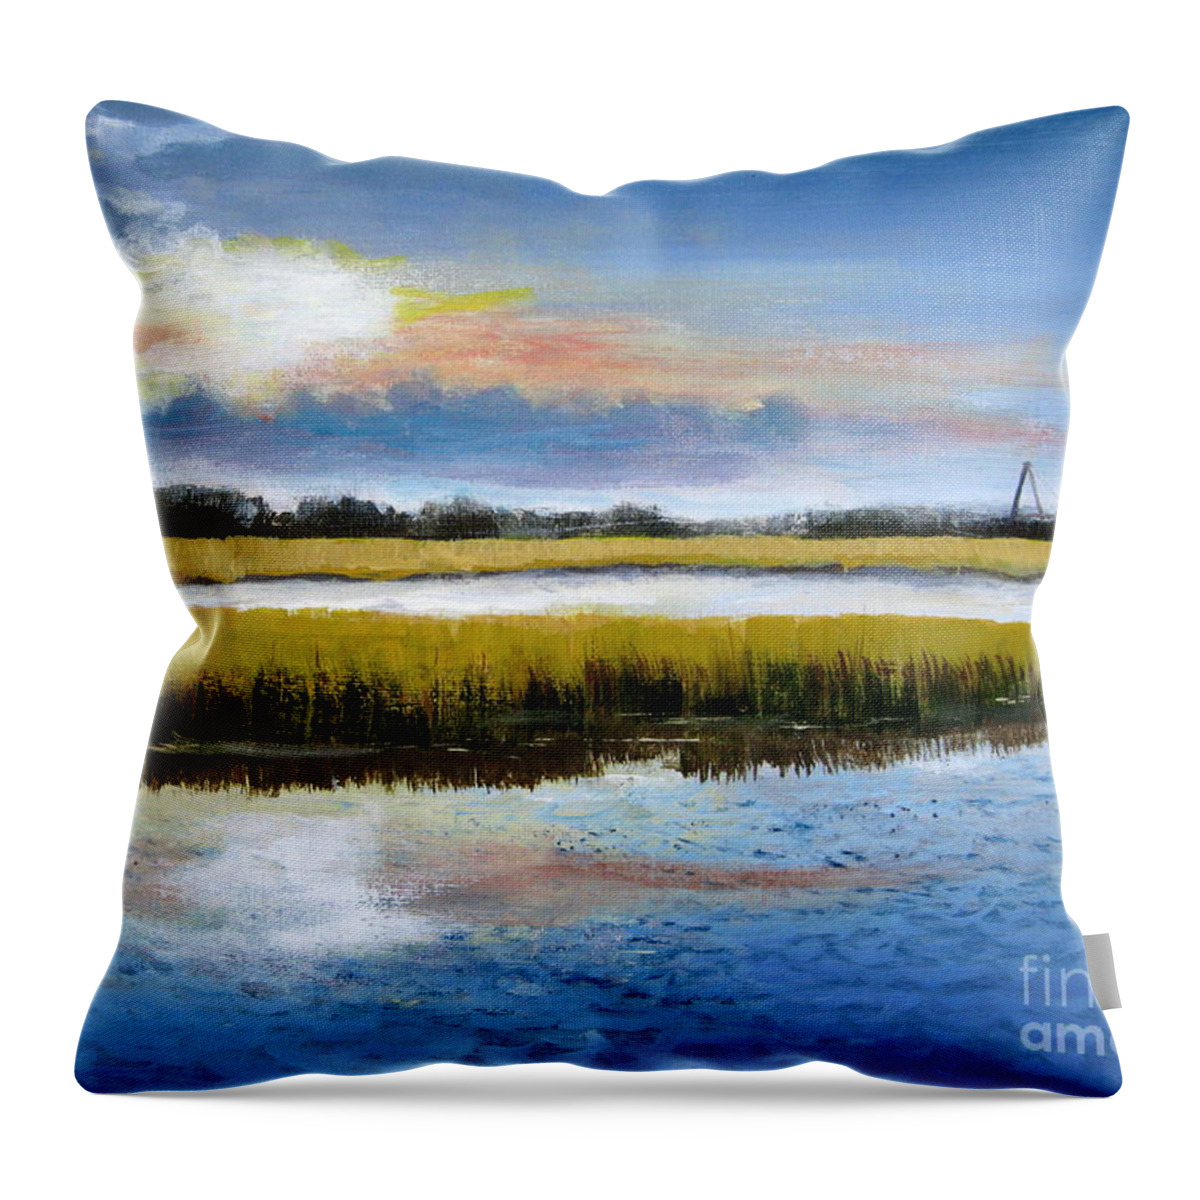 Charleston Throw Pillow featuring the painting Shem Creek Sky by Shirley Braithwaite Hunt